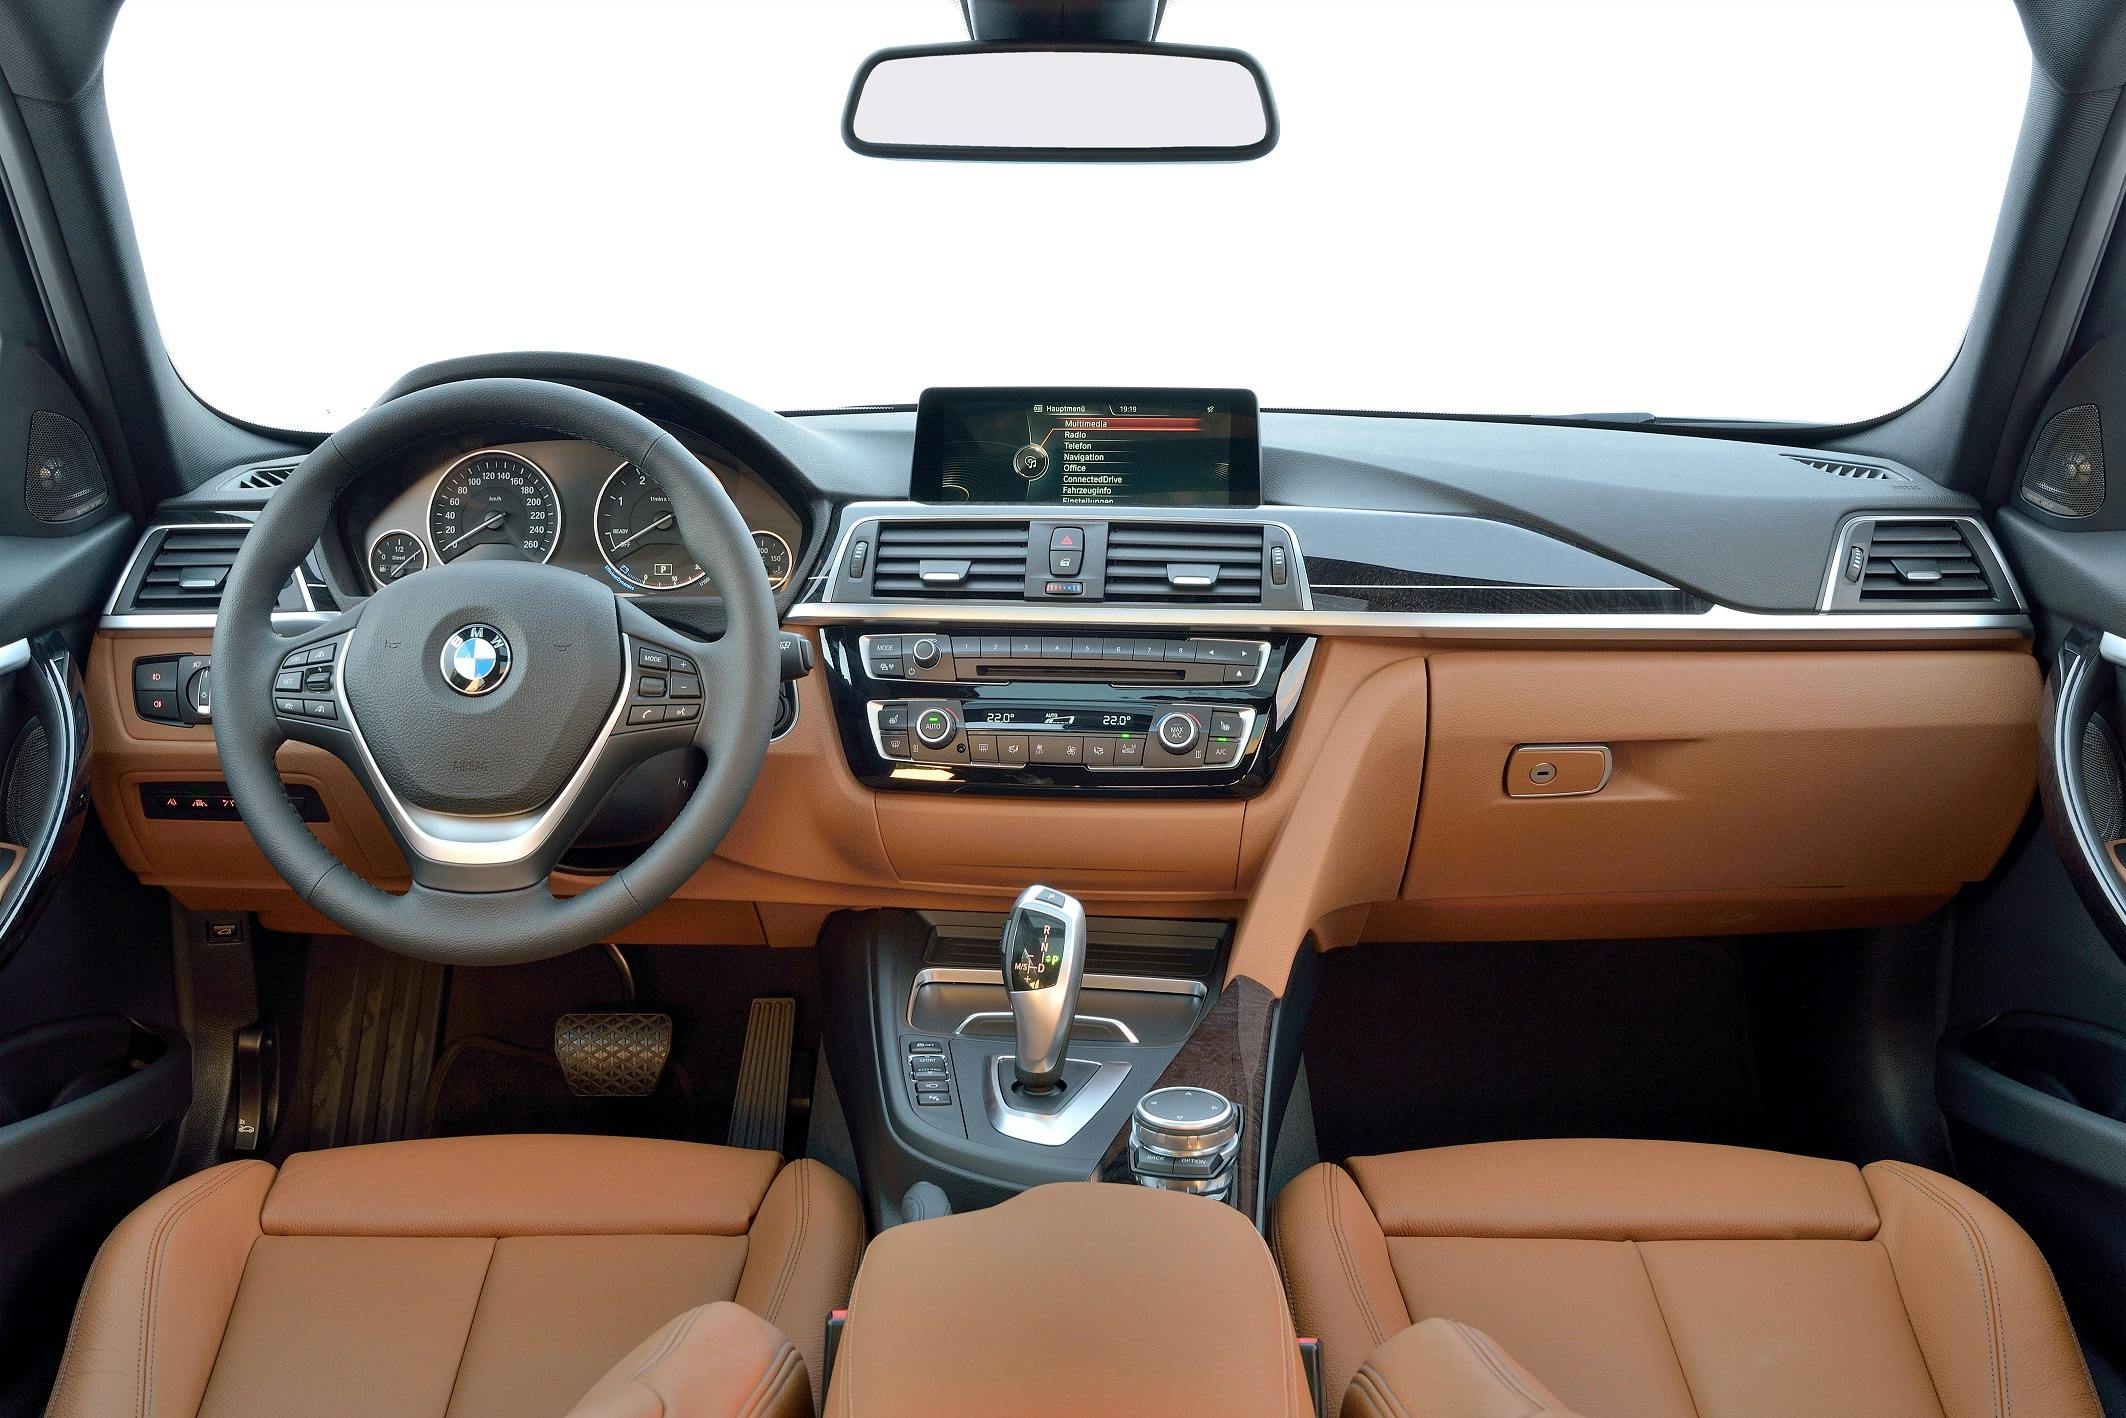 BMW 3er Touring F31: BimmerToday on the road - Eure Fragen zum F31?